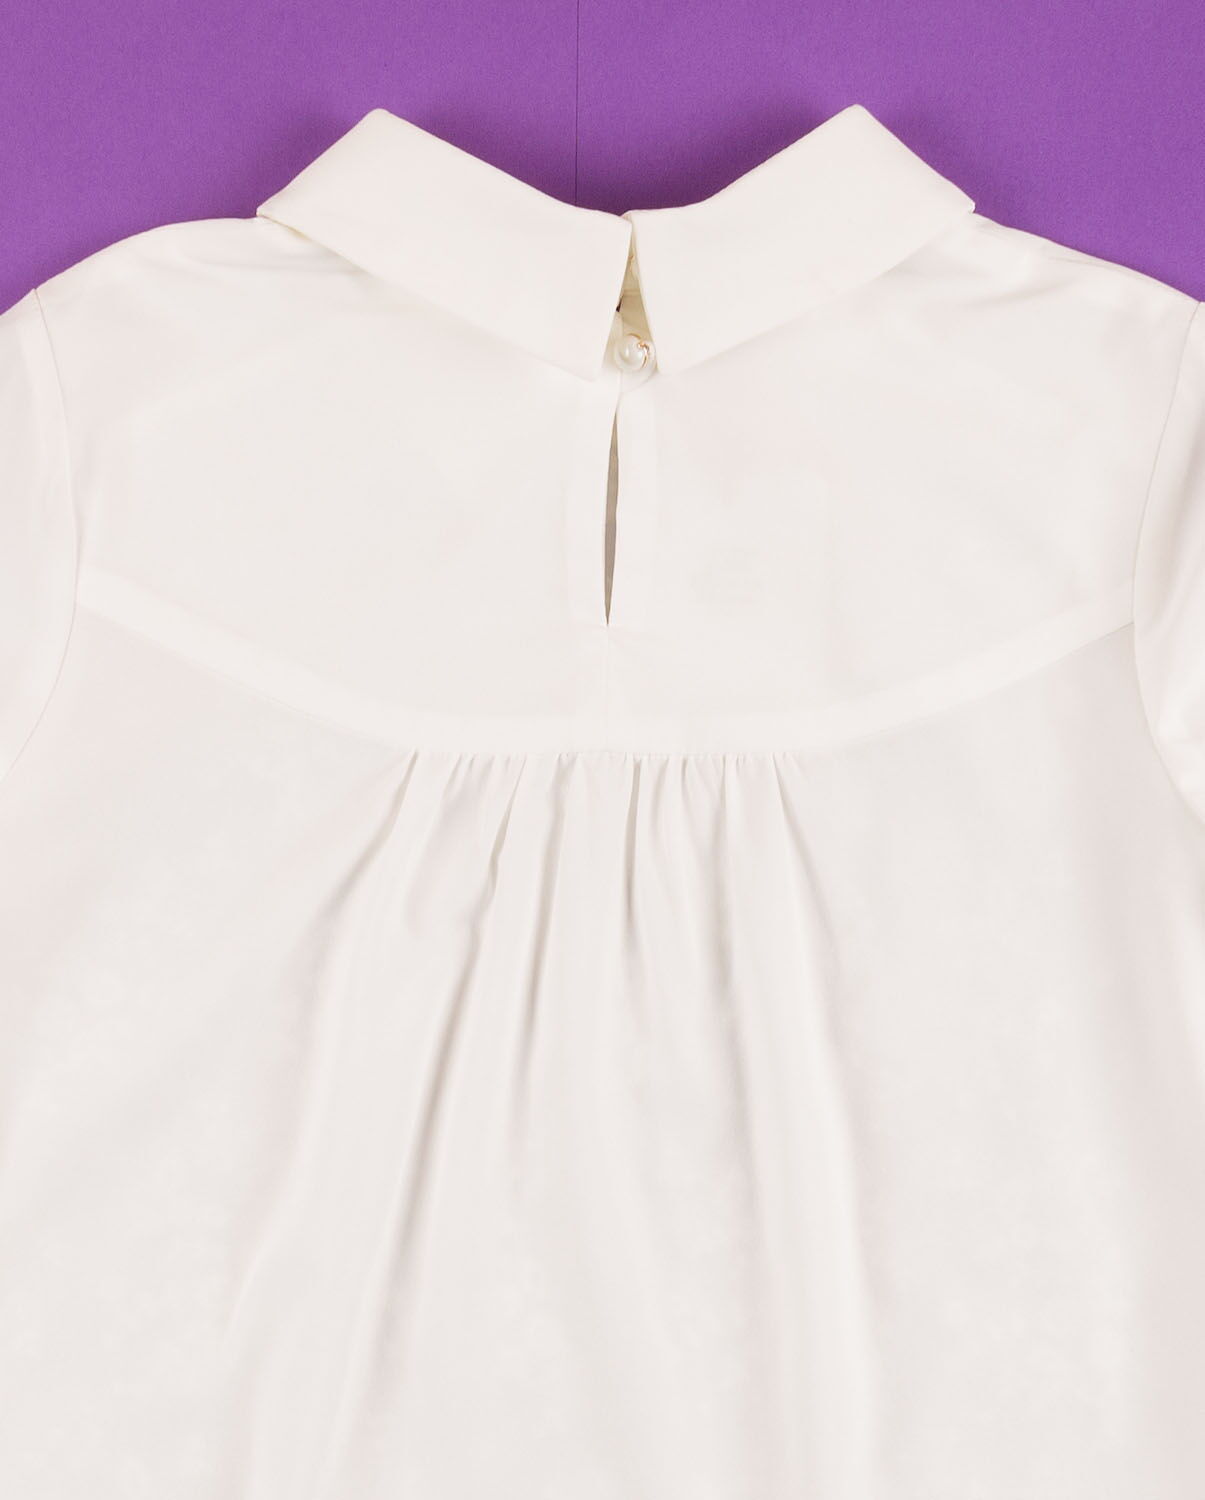 Блузка школьная SUZIE Одри молочная БЛ-24709 - размеры